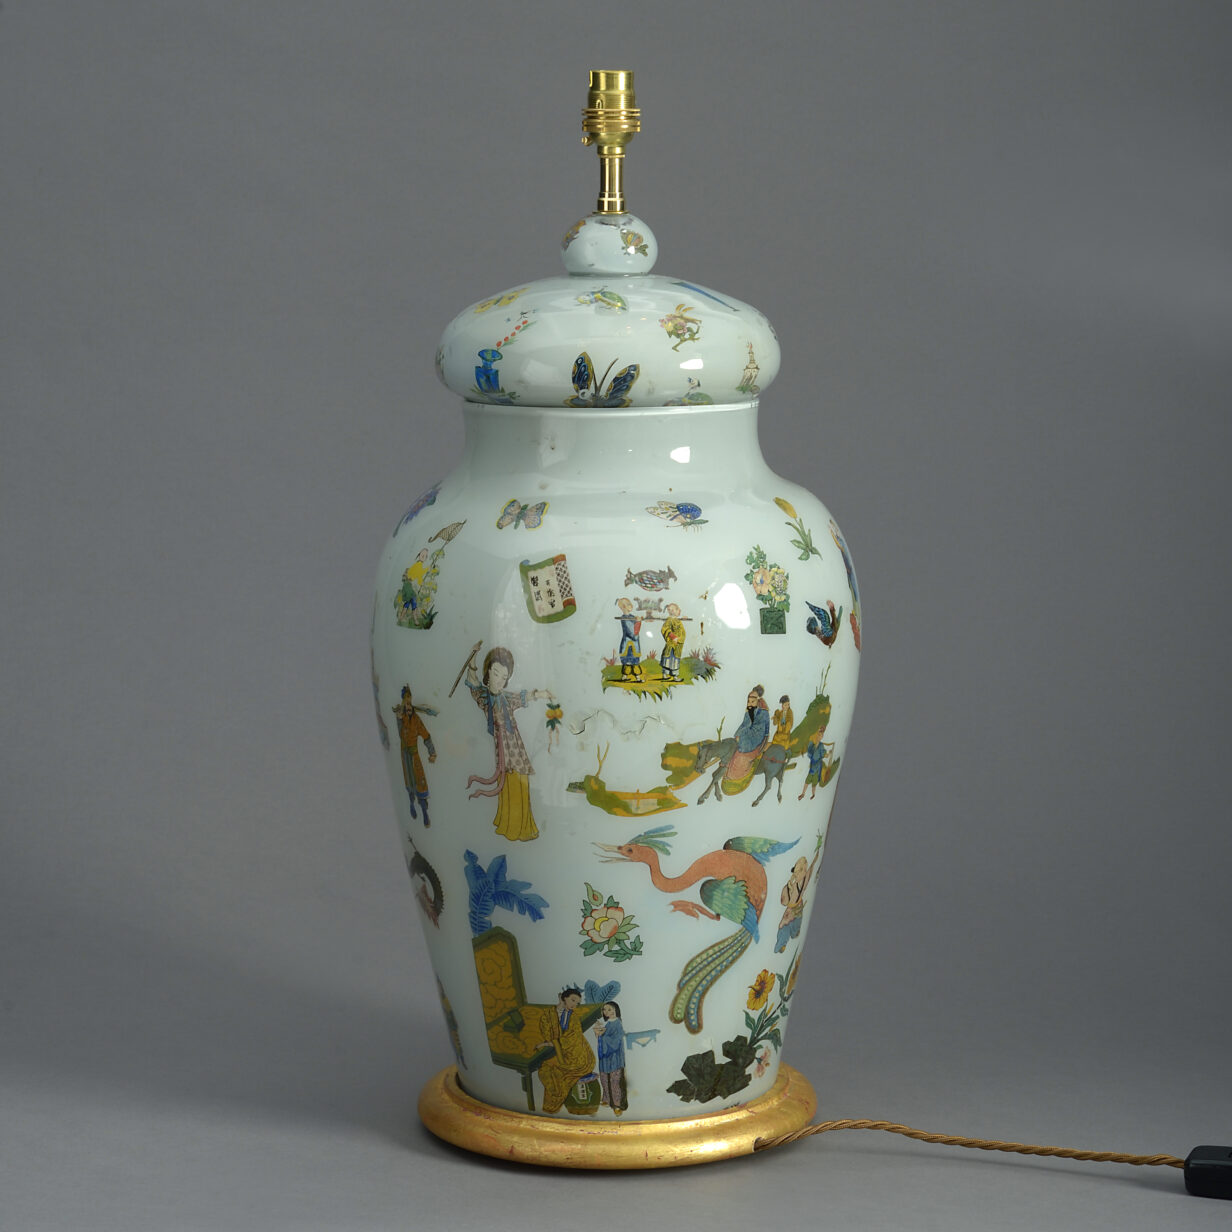 Large 19th century decalcomania vase lamp